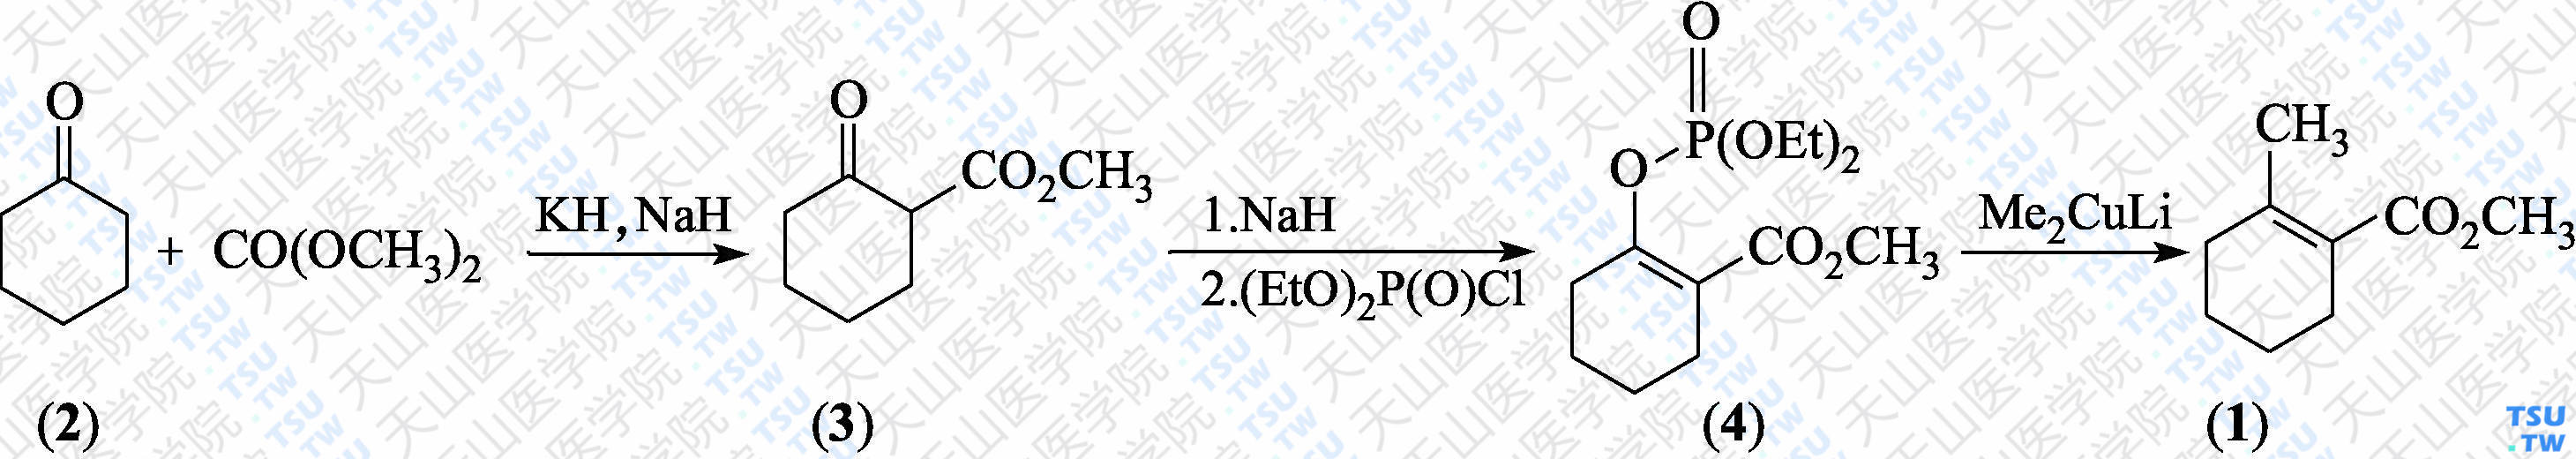 2-甲基-1-环己烯-1-羧酸甲酯（分子式：C<sub>9</sub>H<sub>14</sub>O<sub>2</sub>）的合成方法路线及其结构式